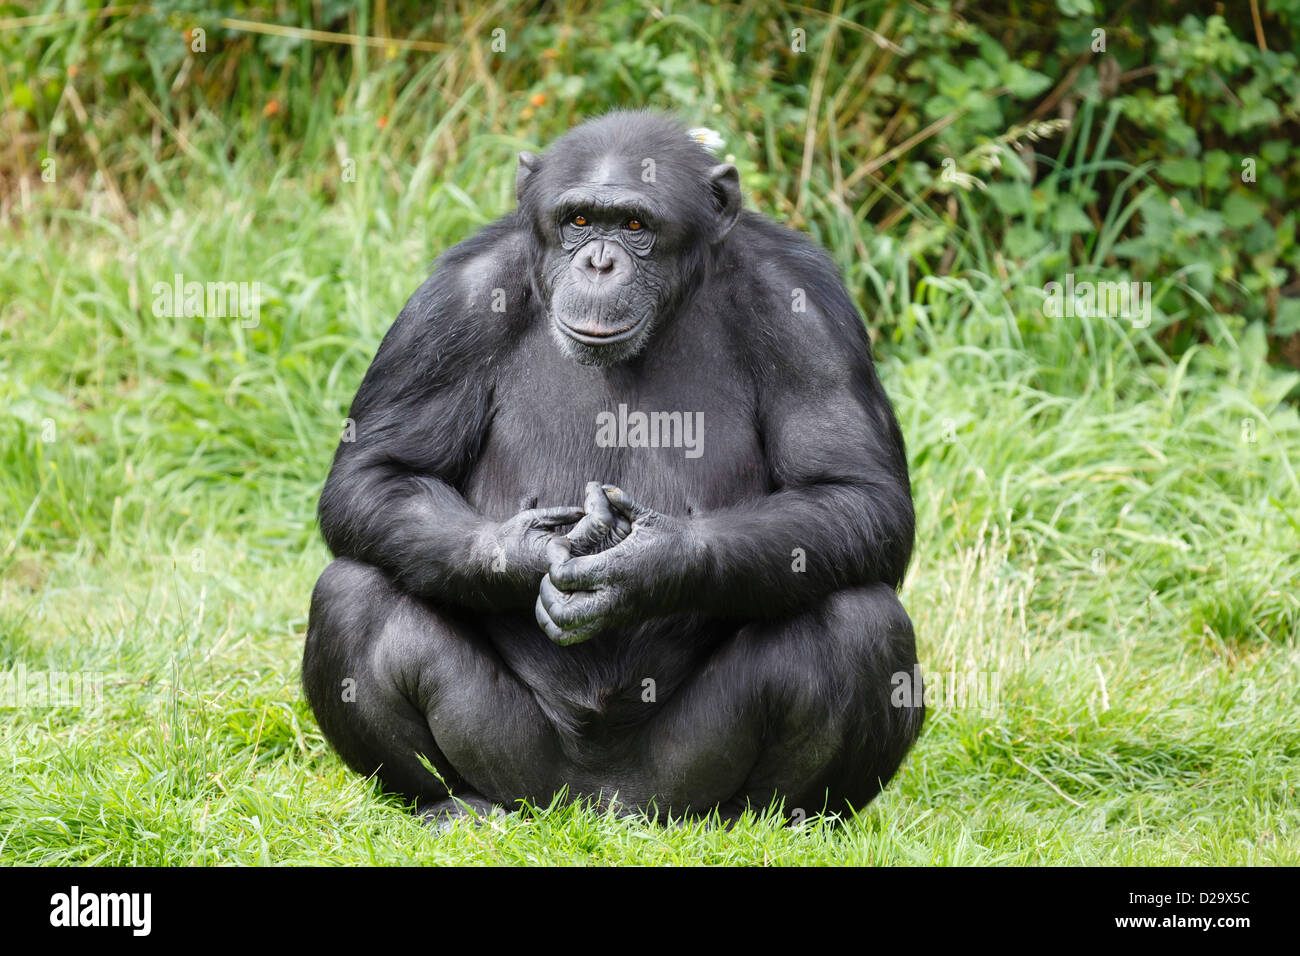 Portrait of a chimp or chimpanzee sitting Stock Photo